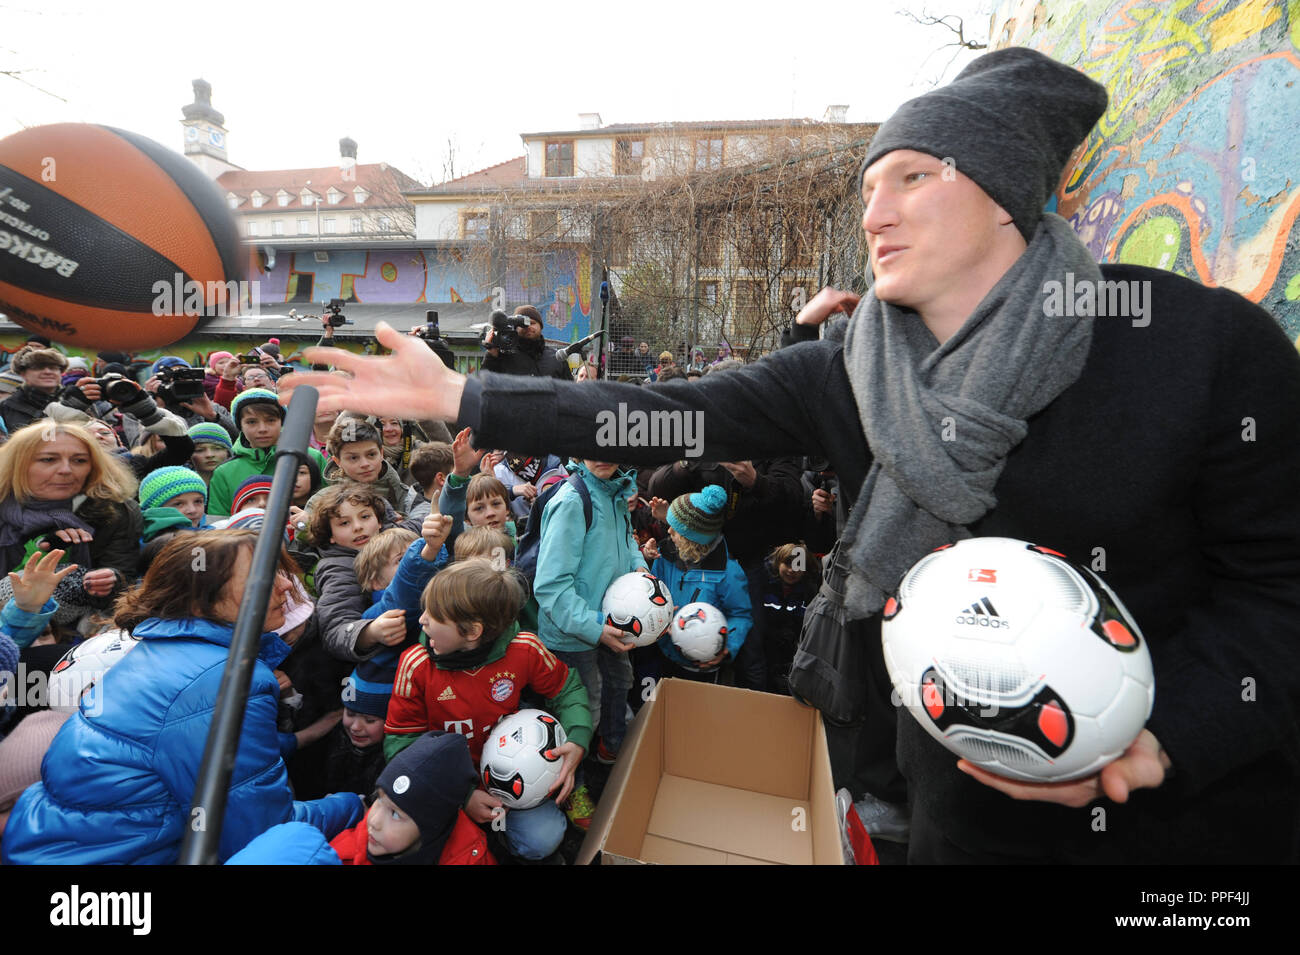 Bastian Schweinsteiger, football player at FC Bayern Munich, distributes 100 balls to children at an event for the saving of the sports ground at the community center Glockenbachwerkstatt in the Blumenstrasse. Stock Photo